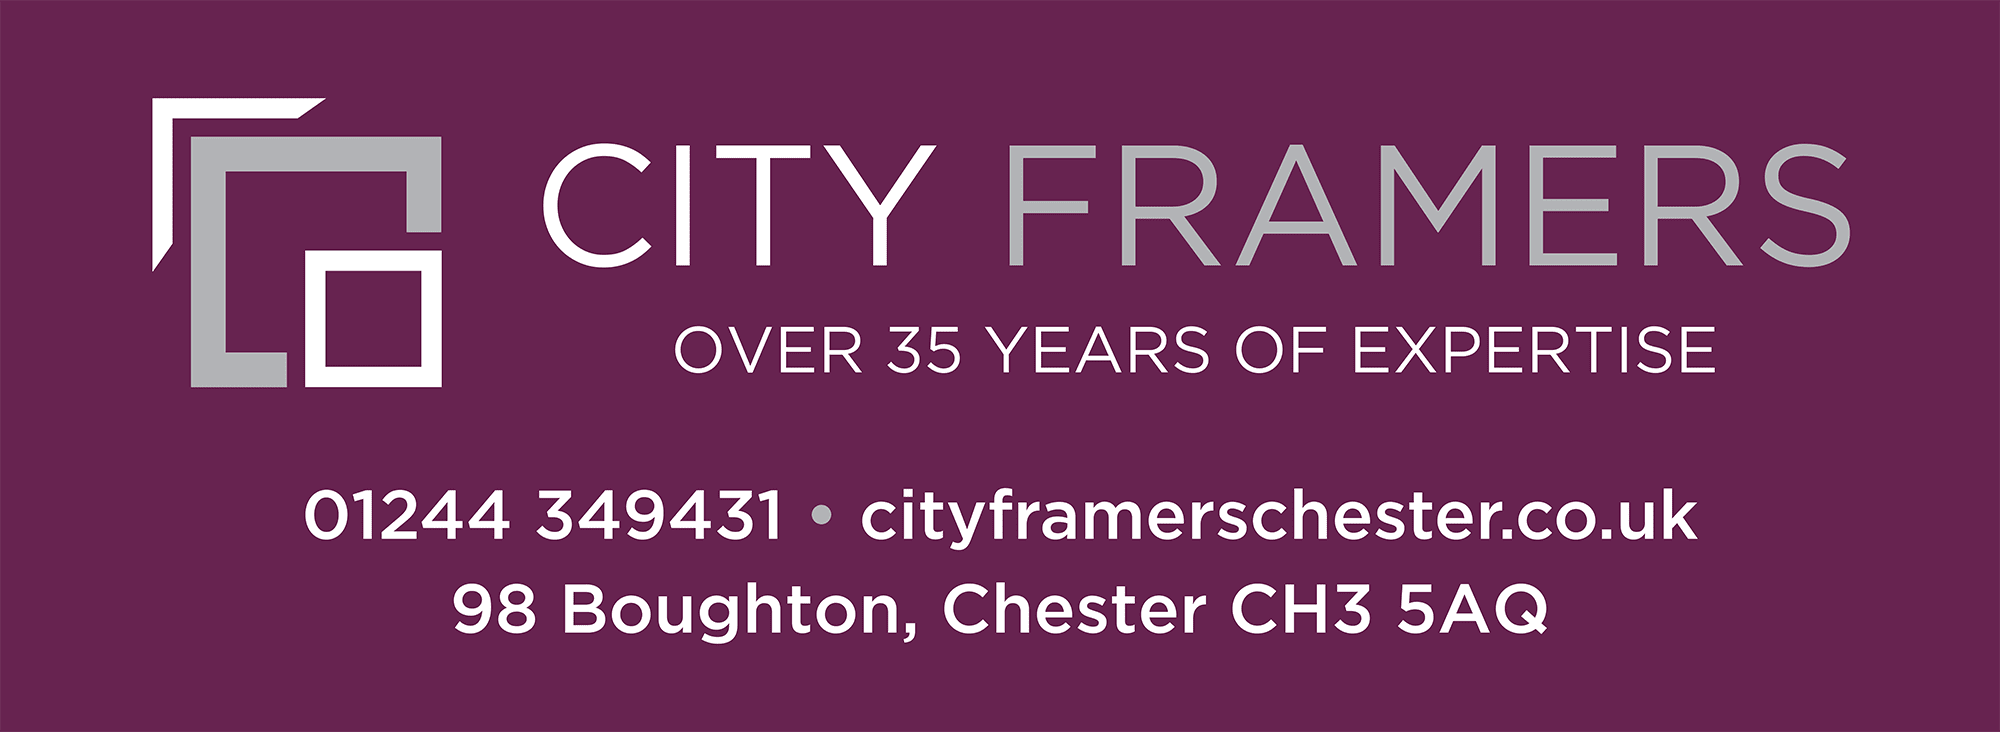 city framers-advert